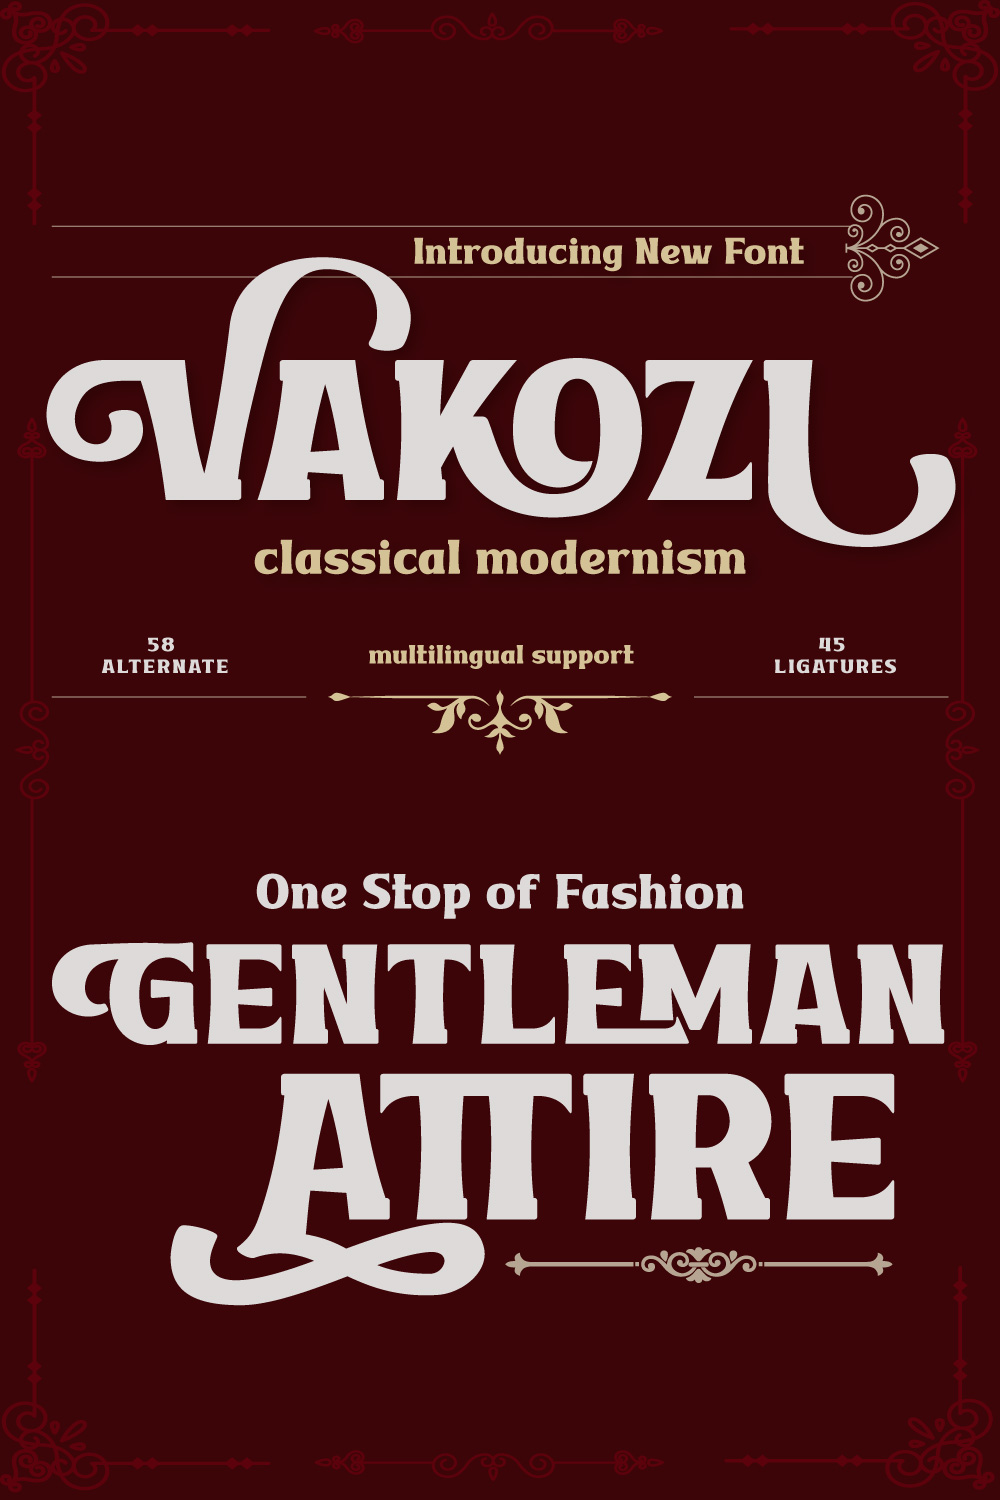 VAKOZI | Serif Classic Modernism pinterest preview image.